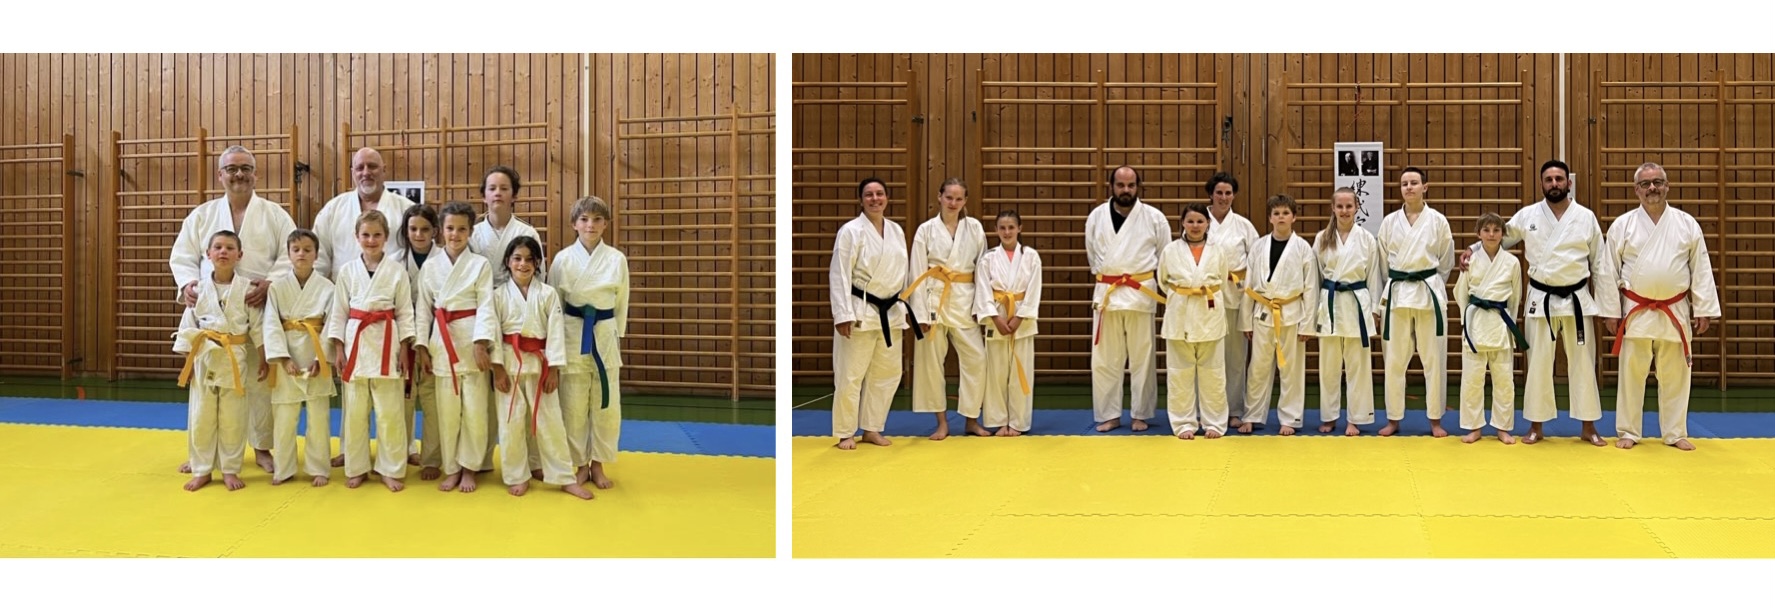 visintini Gaidano corsi di judo e karate